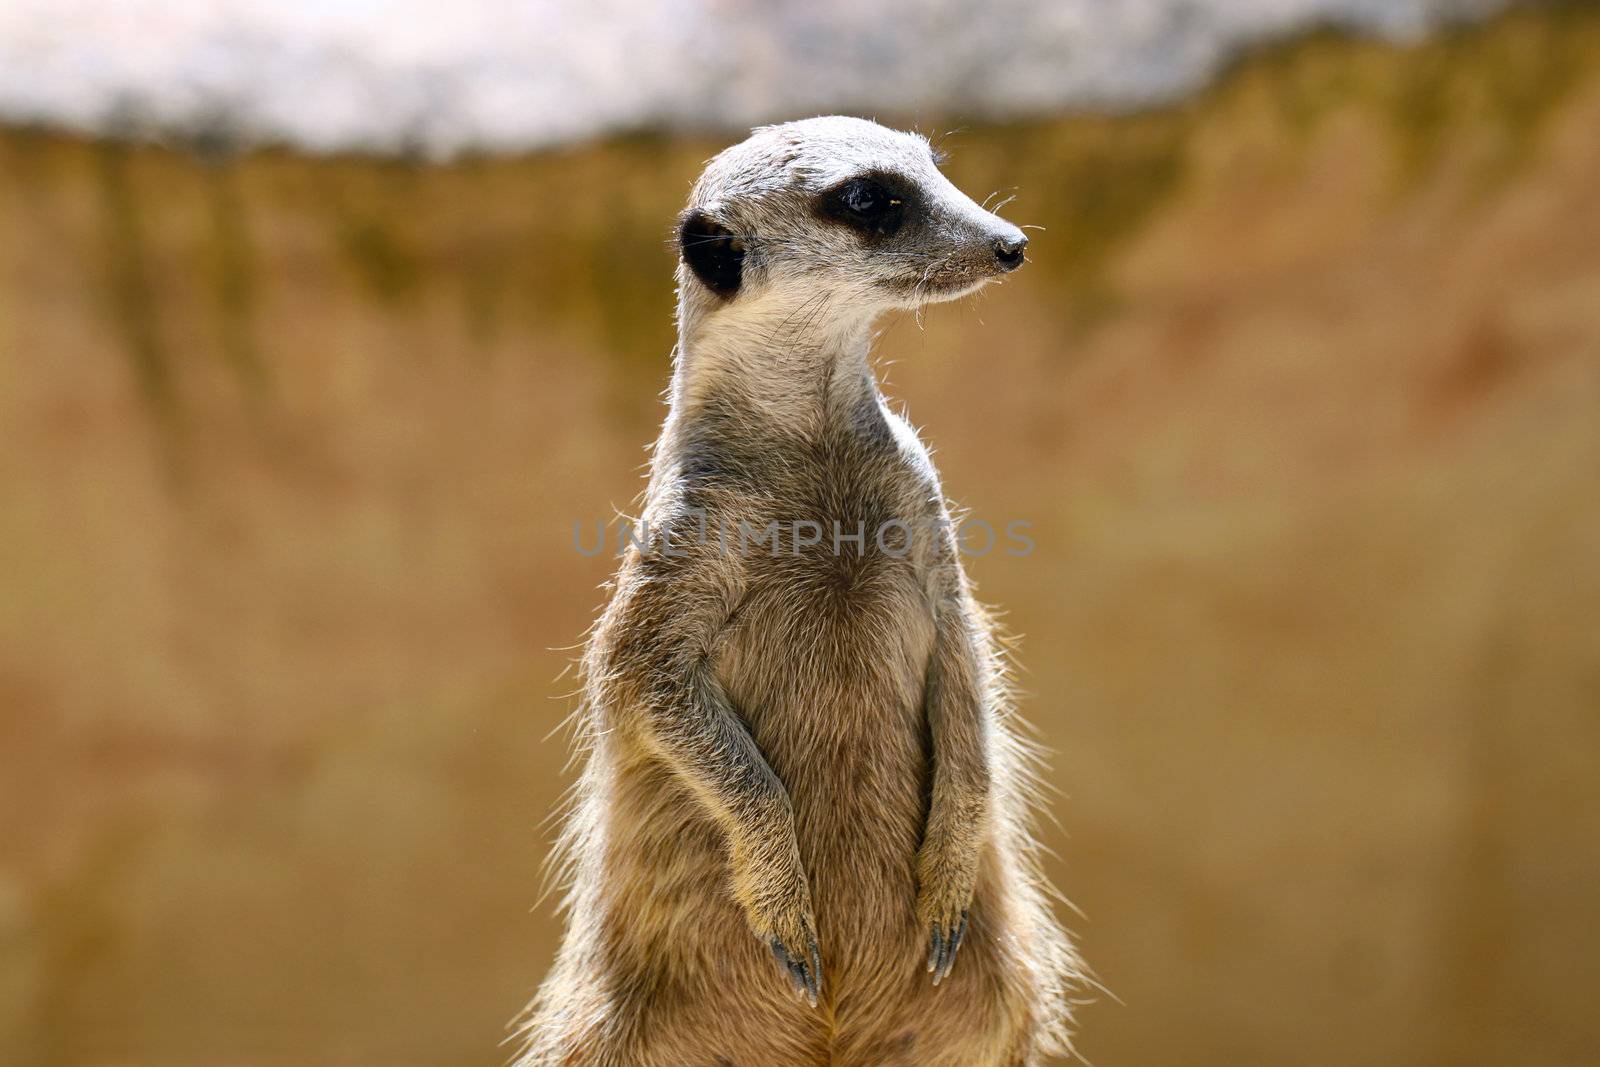 Meerkat (Surikate) standing upright as Sentry - Suricata suricat by Cloudia